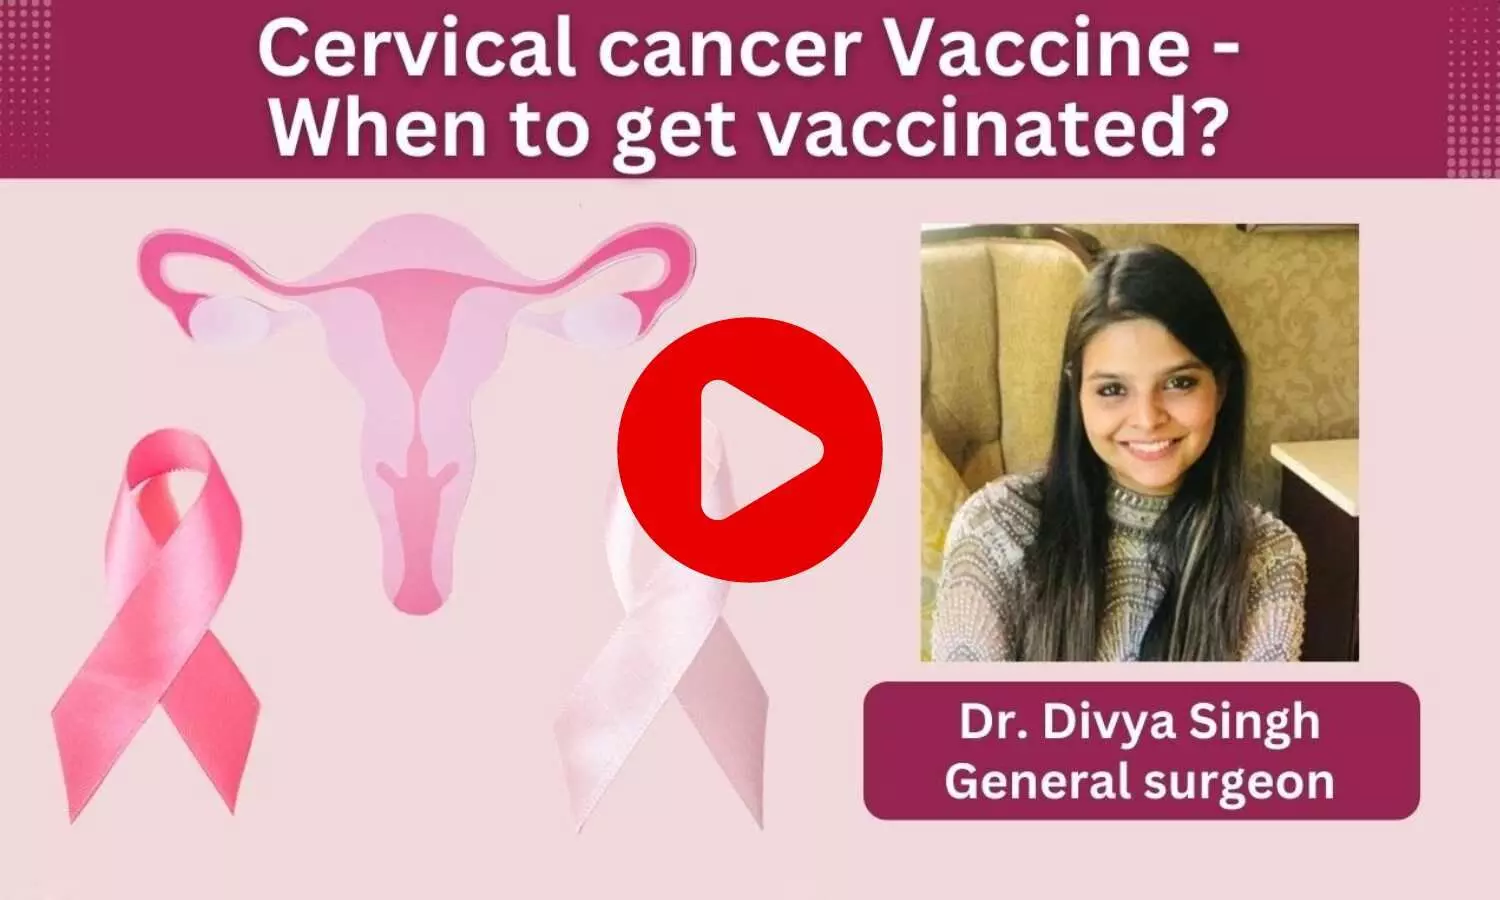 Myths busted on Cervical Cancer Vaccine by Dr. Divya Singh